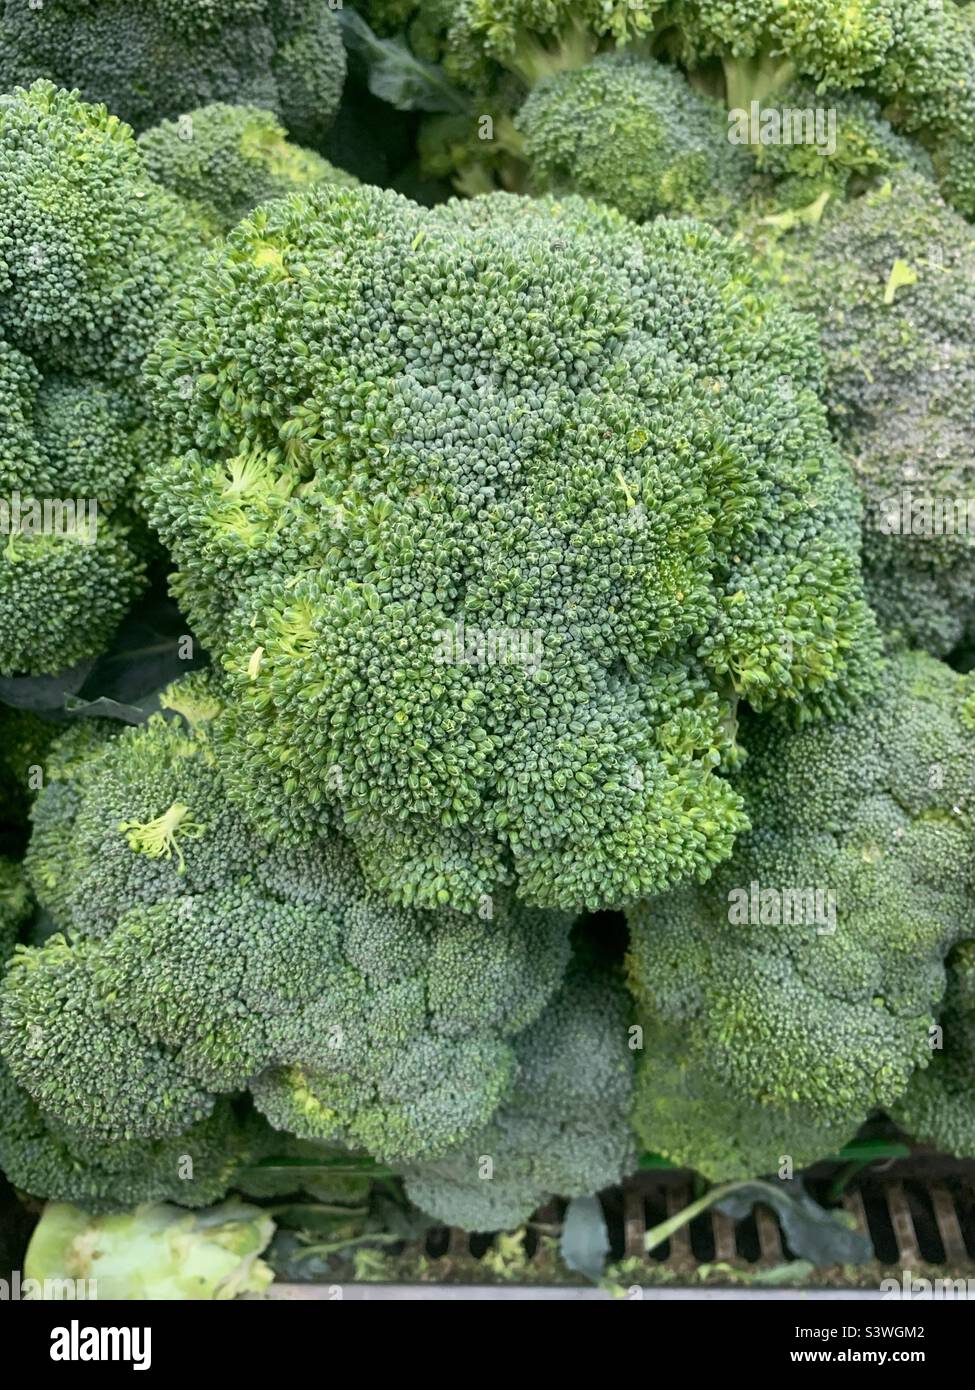 Delicious garden fresh broccoli head in the produce area. Stock Photo